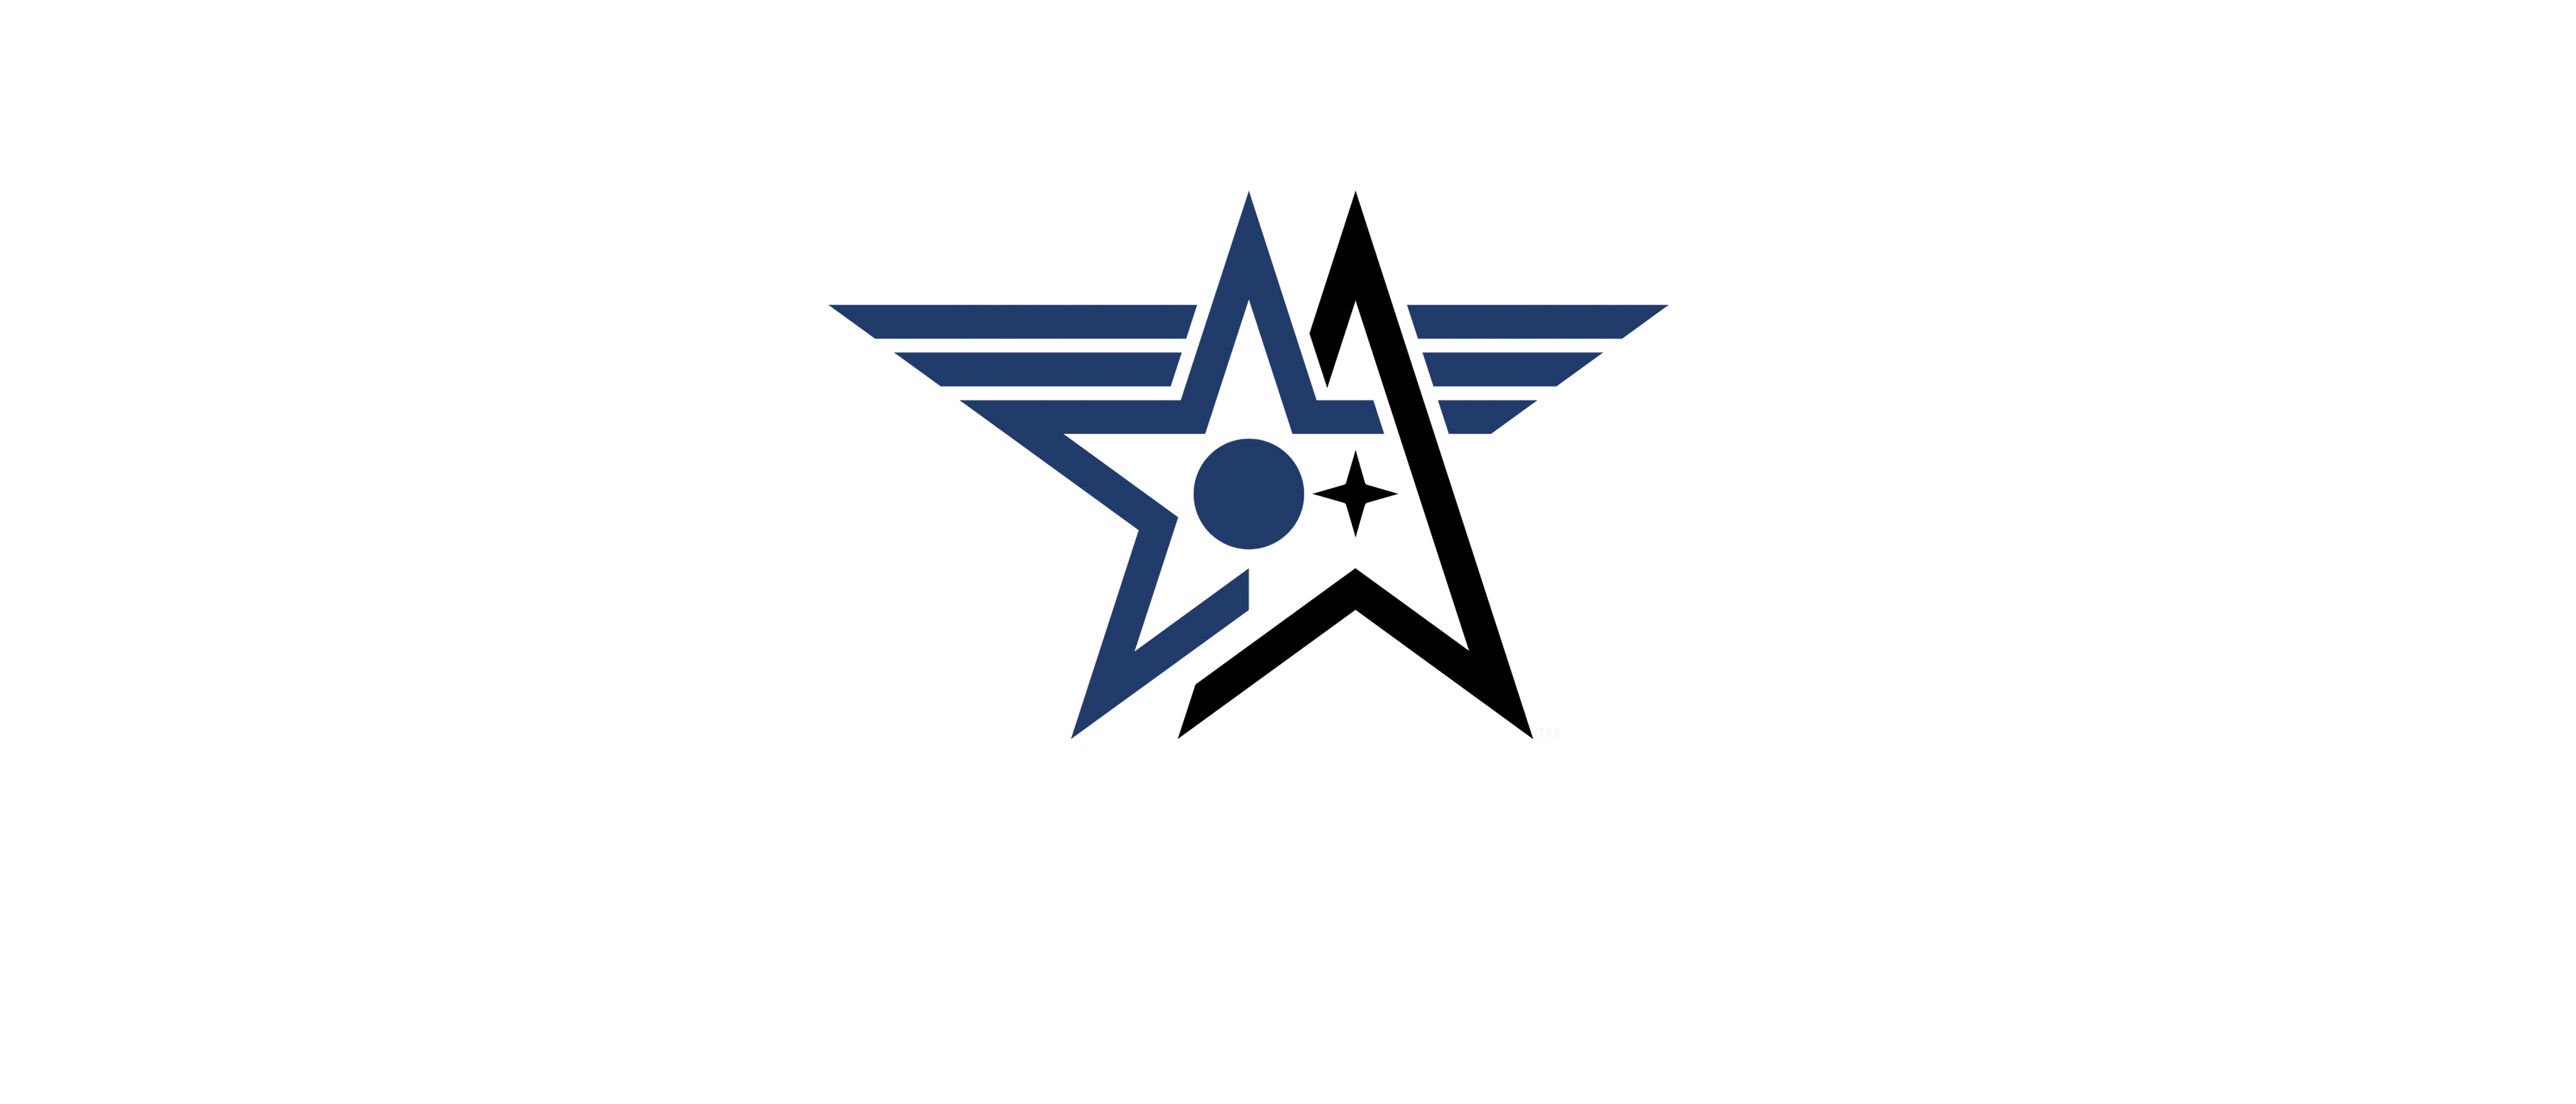 AFA Branding Guide & Logos  Air & Space Forces Association